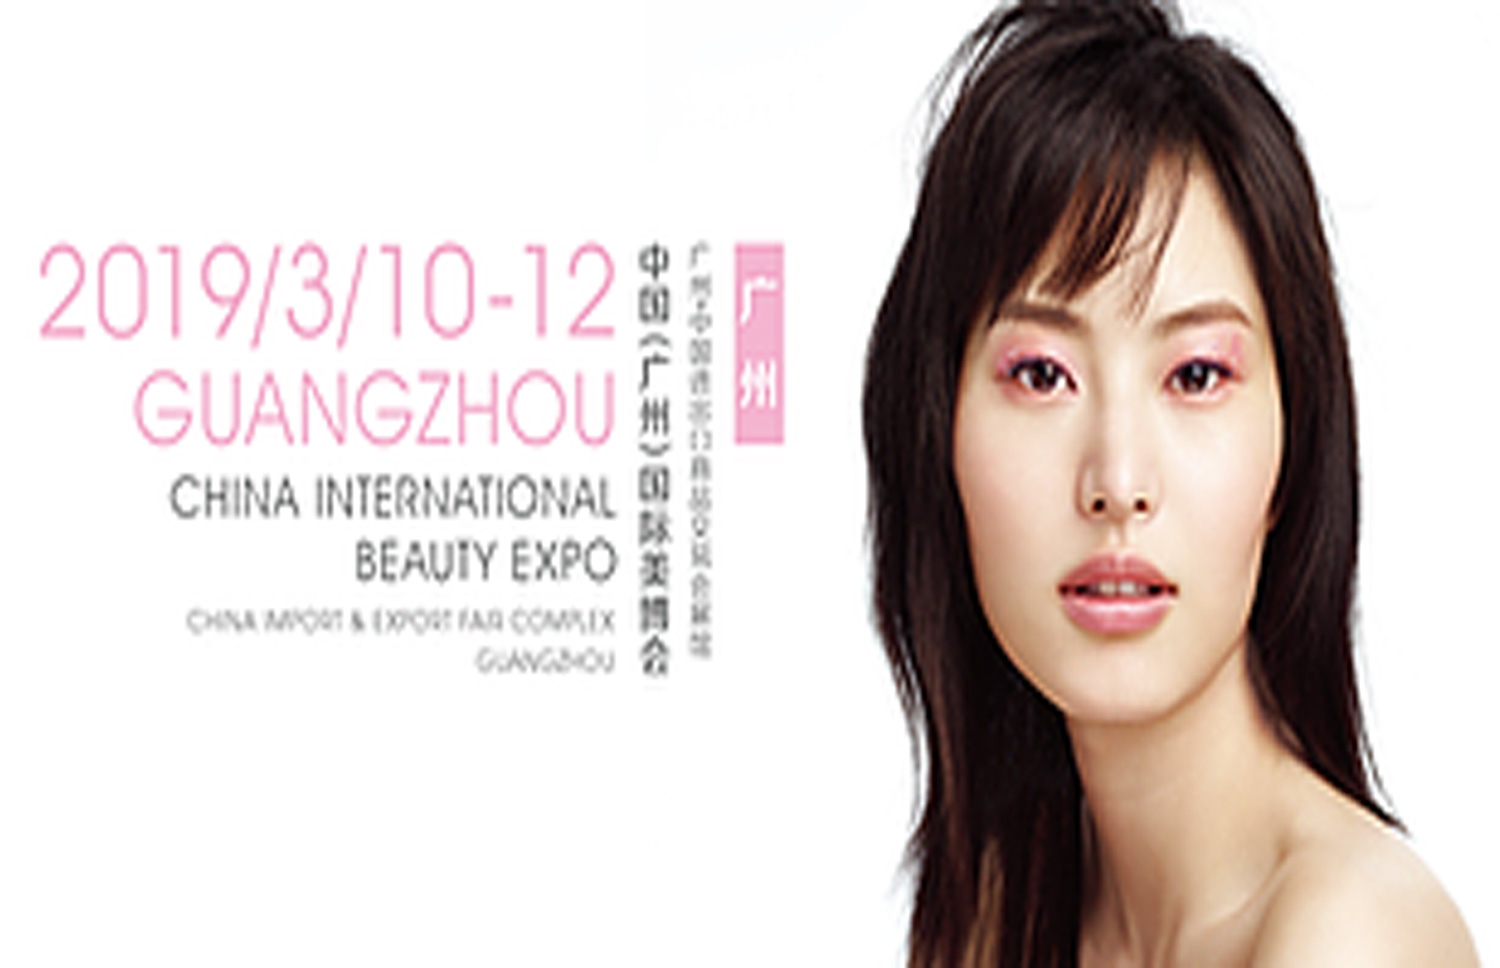 2019 China International Beauty Expo @Guangzhou